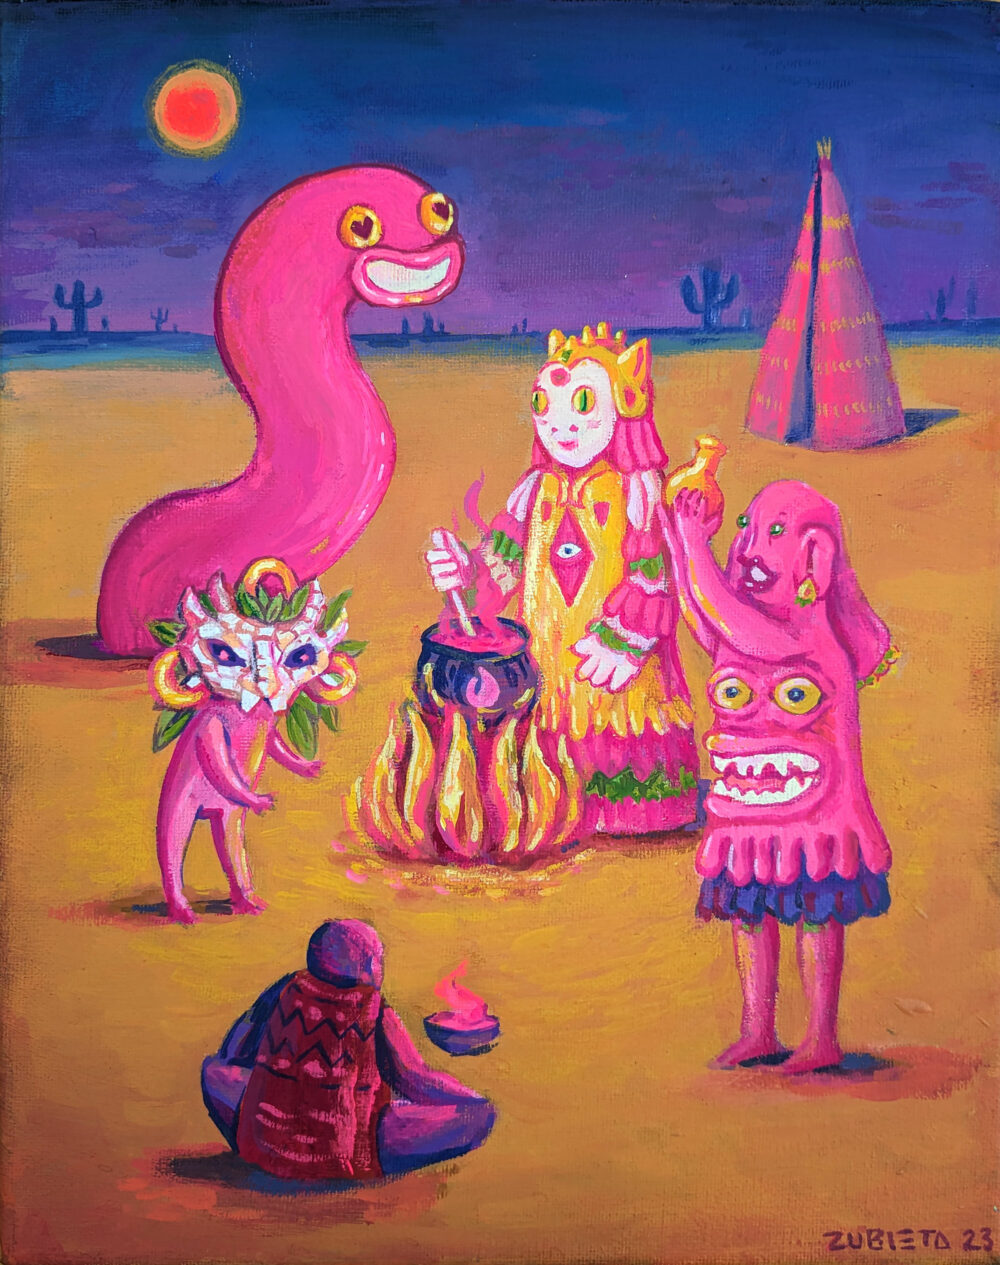 Marta zubieta canvas original painting of a ritual in the desert